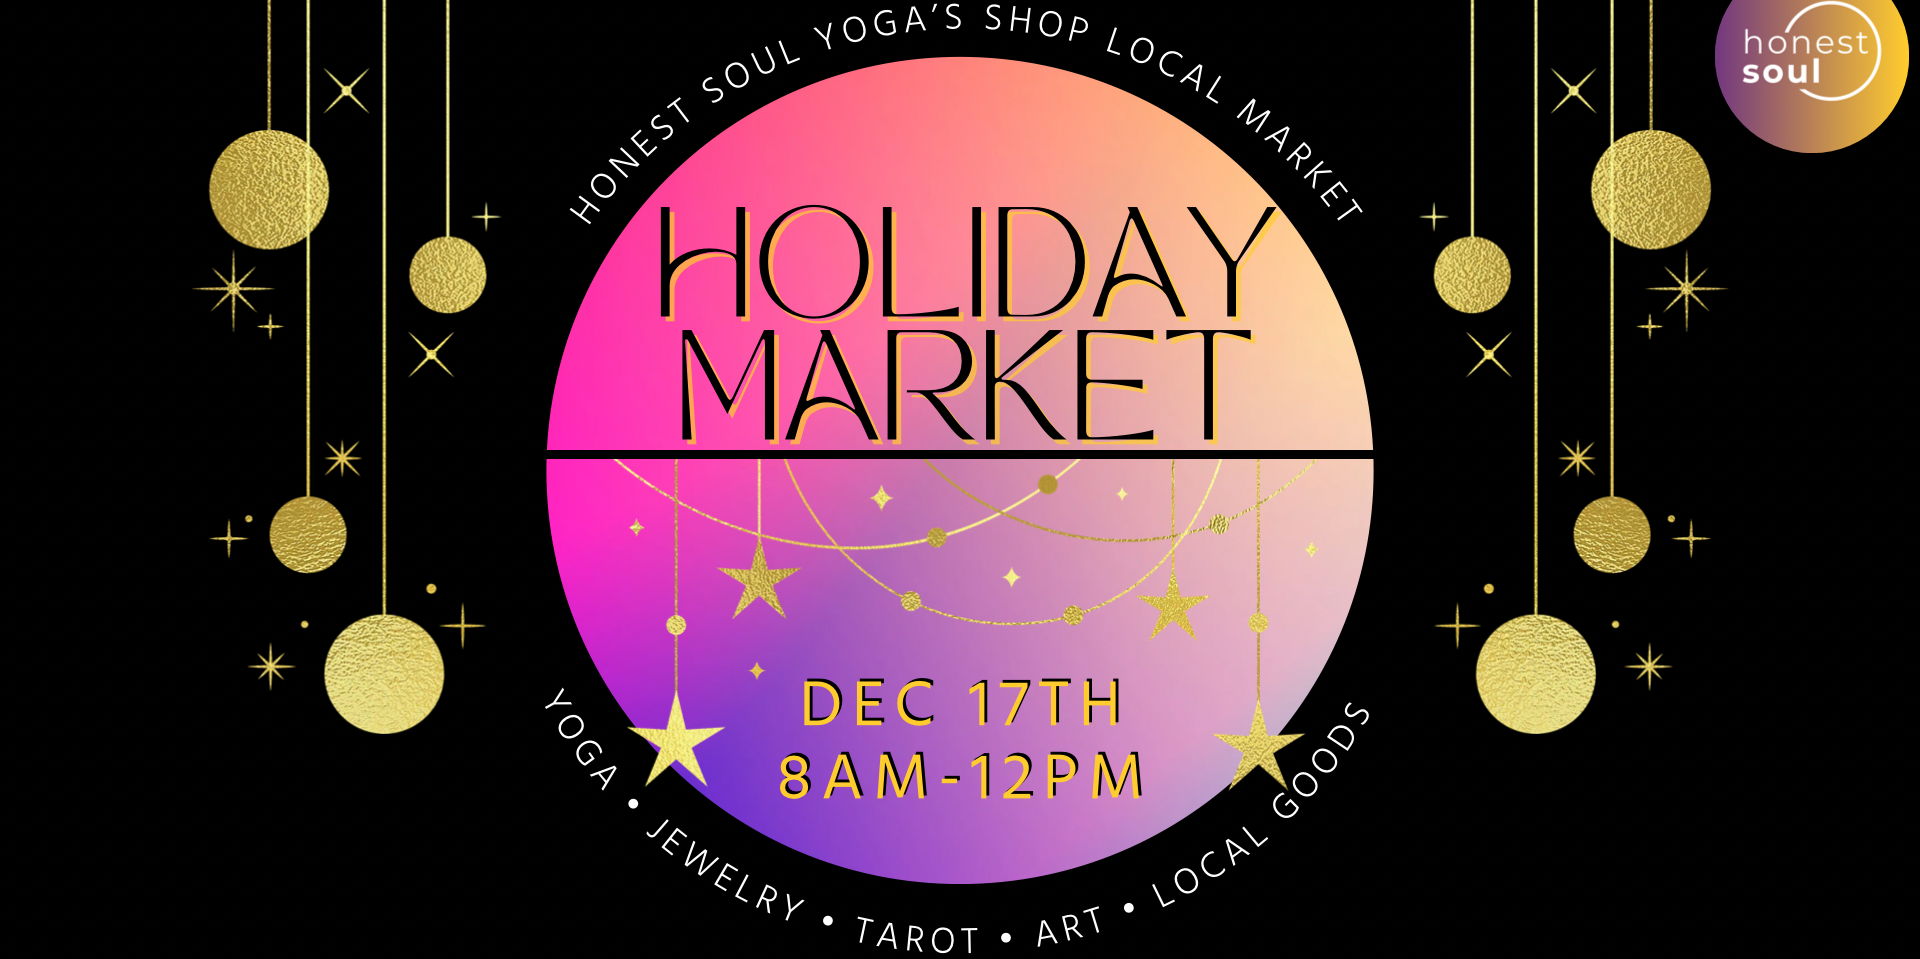 Shop Local Holiday Market promotional image